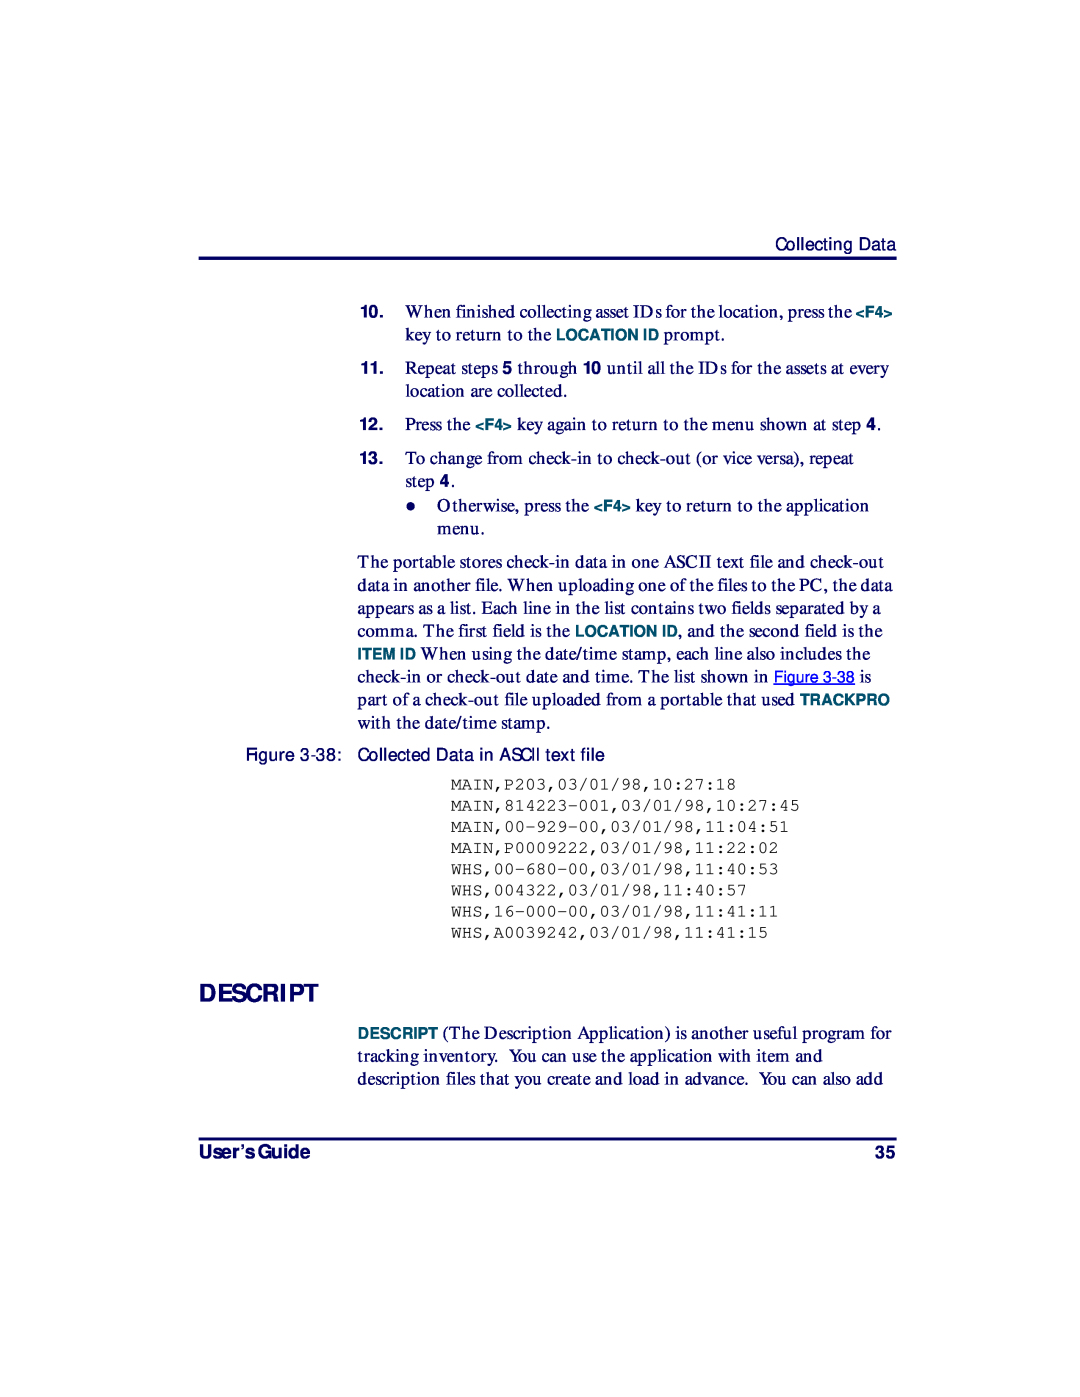 PSC PT2000, TopGun manual Descript, User’s Guide 